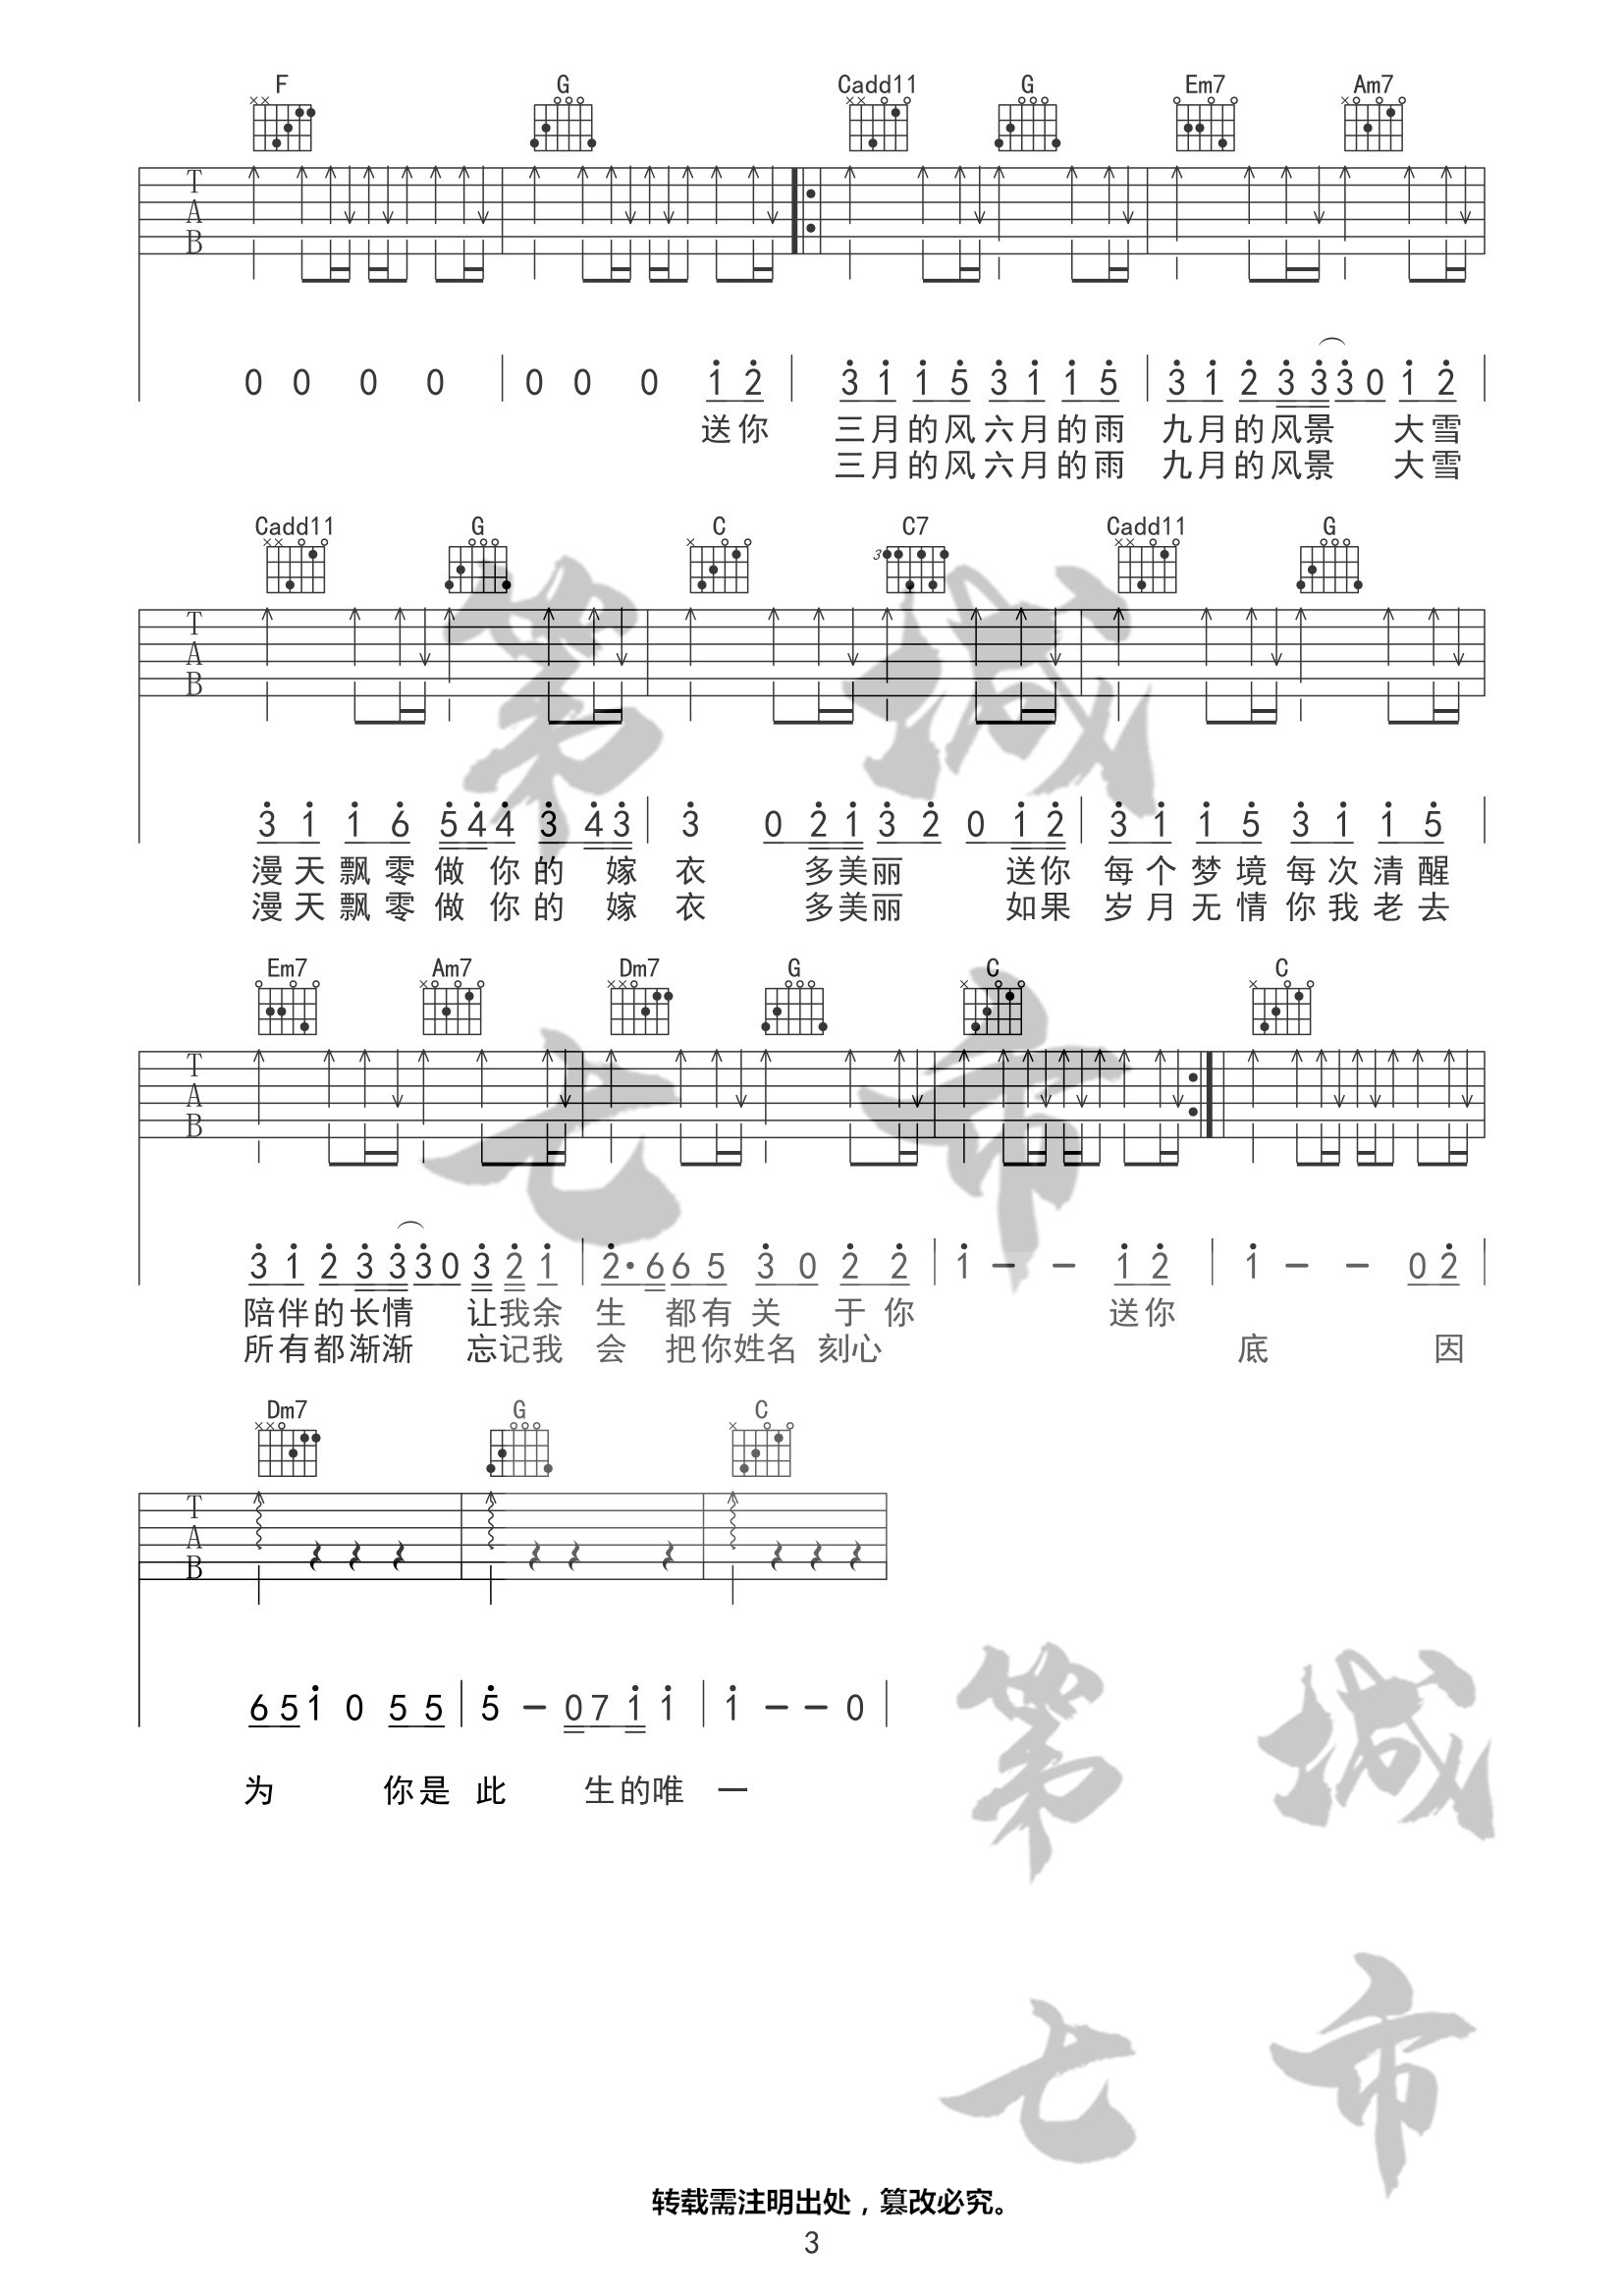 peaches吉他谱简单版,pes吉他简,吉他简单版简化版(第17页)_大山谷图库